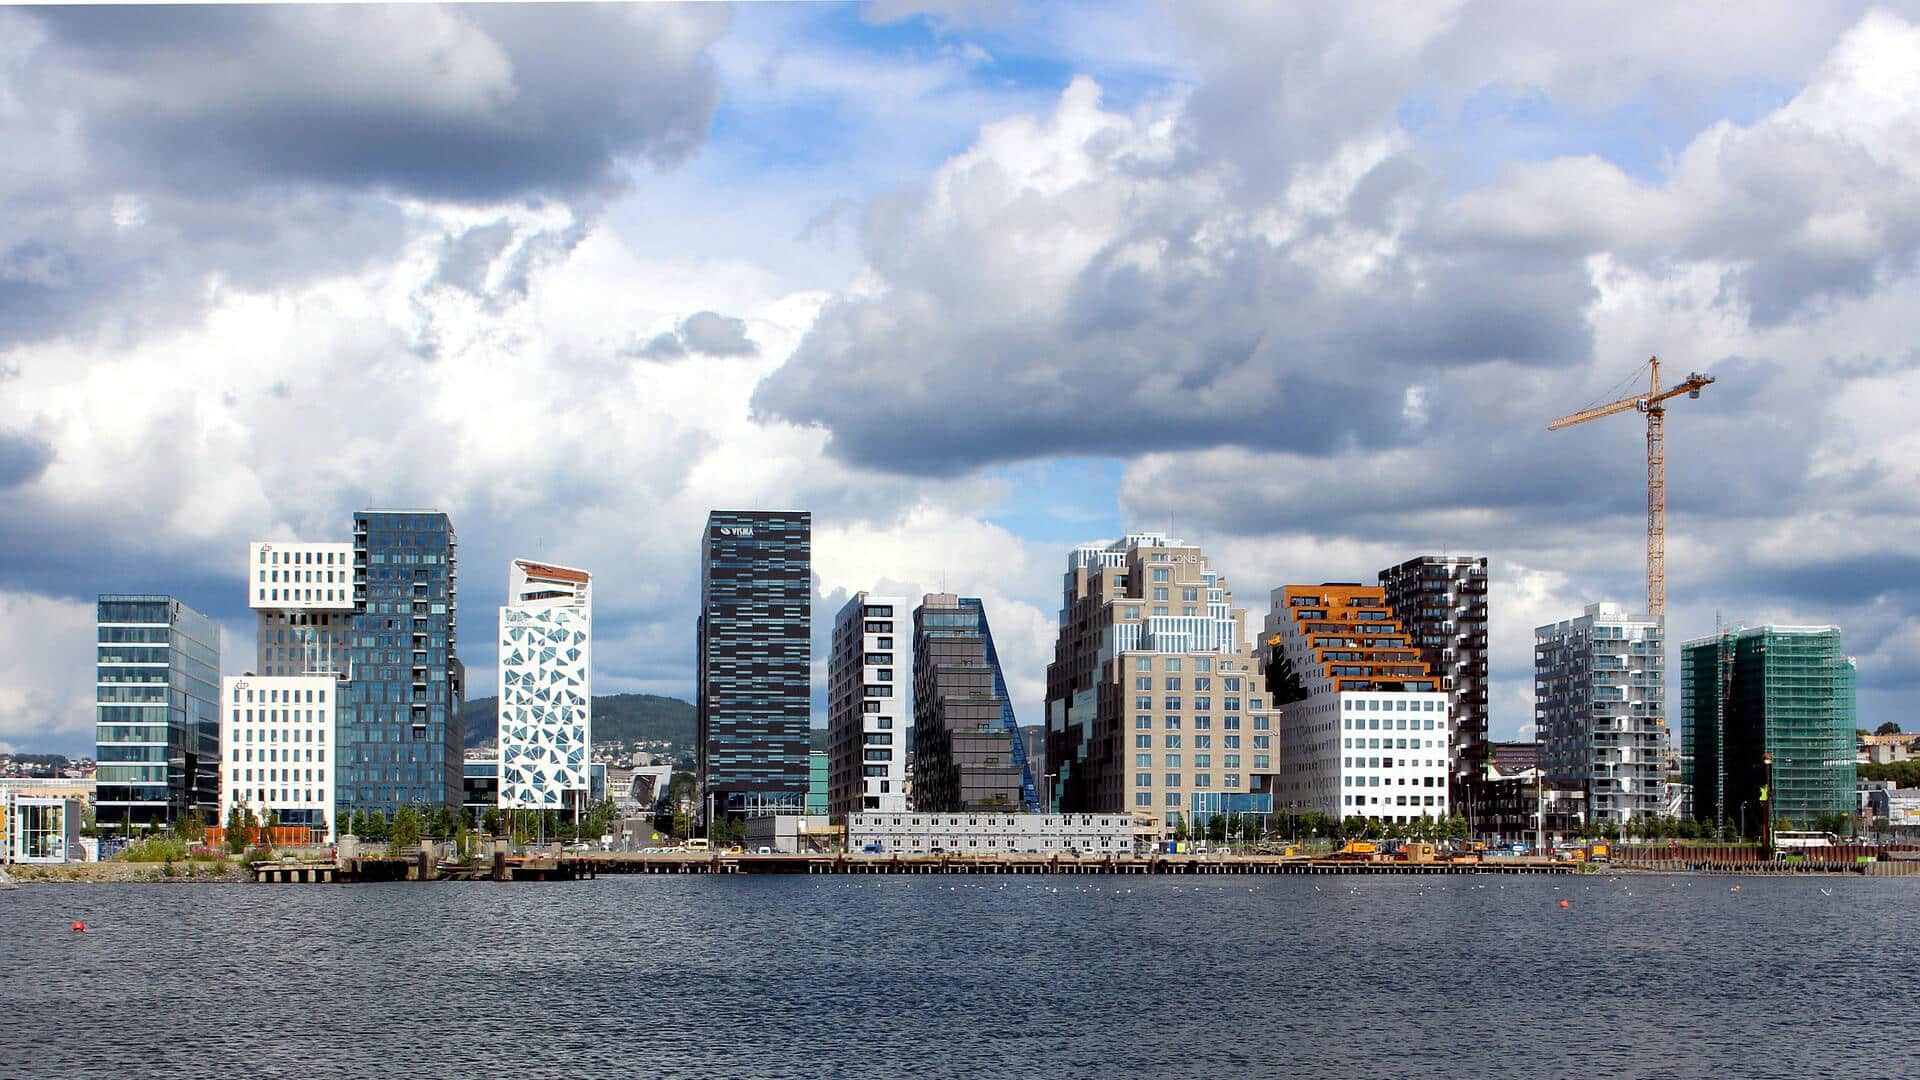 Oslo smart city